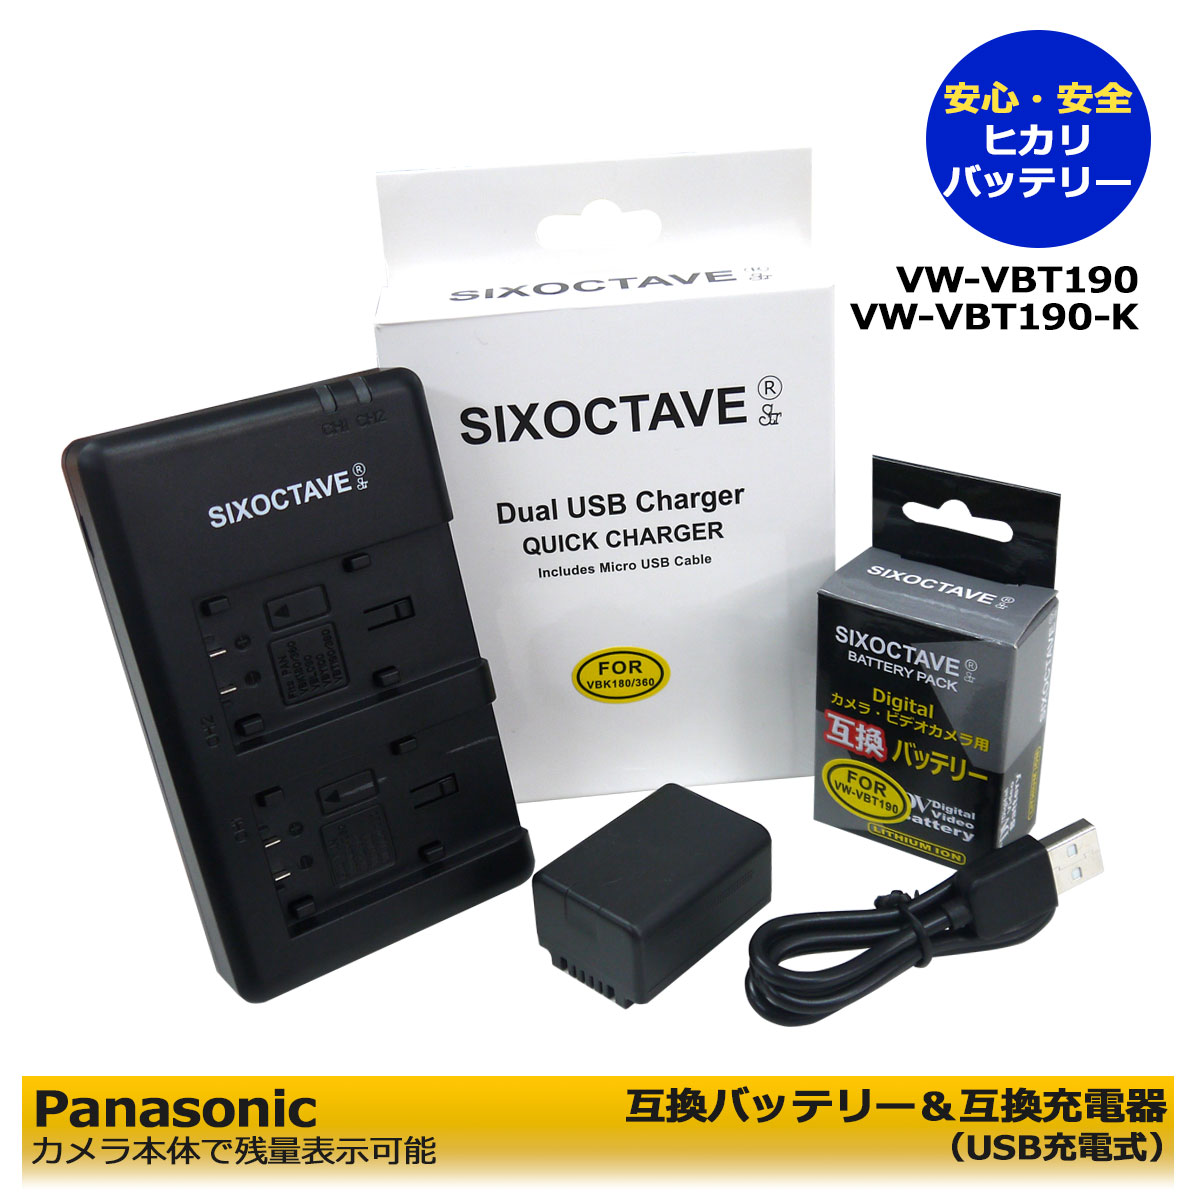 VW-VBT190 / VW-VBT190-K （送料無料）Panasonic 互換バッテリー 1個 と 互換充電器 1個（USB充電式）の2点セット 2個同時充電対応 HC-WXF990M/HC-WX995M/HC-WX990M/HC-WX970M/HC-VX980M/HC-W870M/HC-W850M/HC-W870M/HC-W580M/HC-W590M/HC-WZ590M/HC-W585M HC-V495M